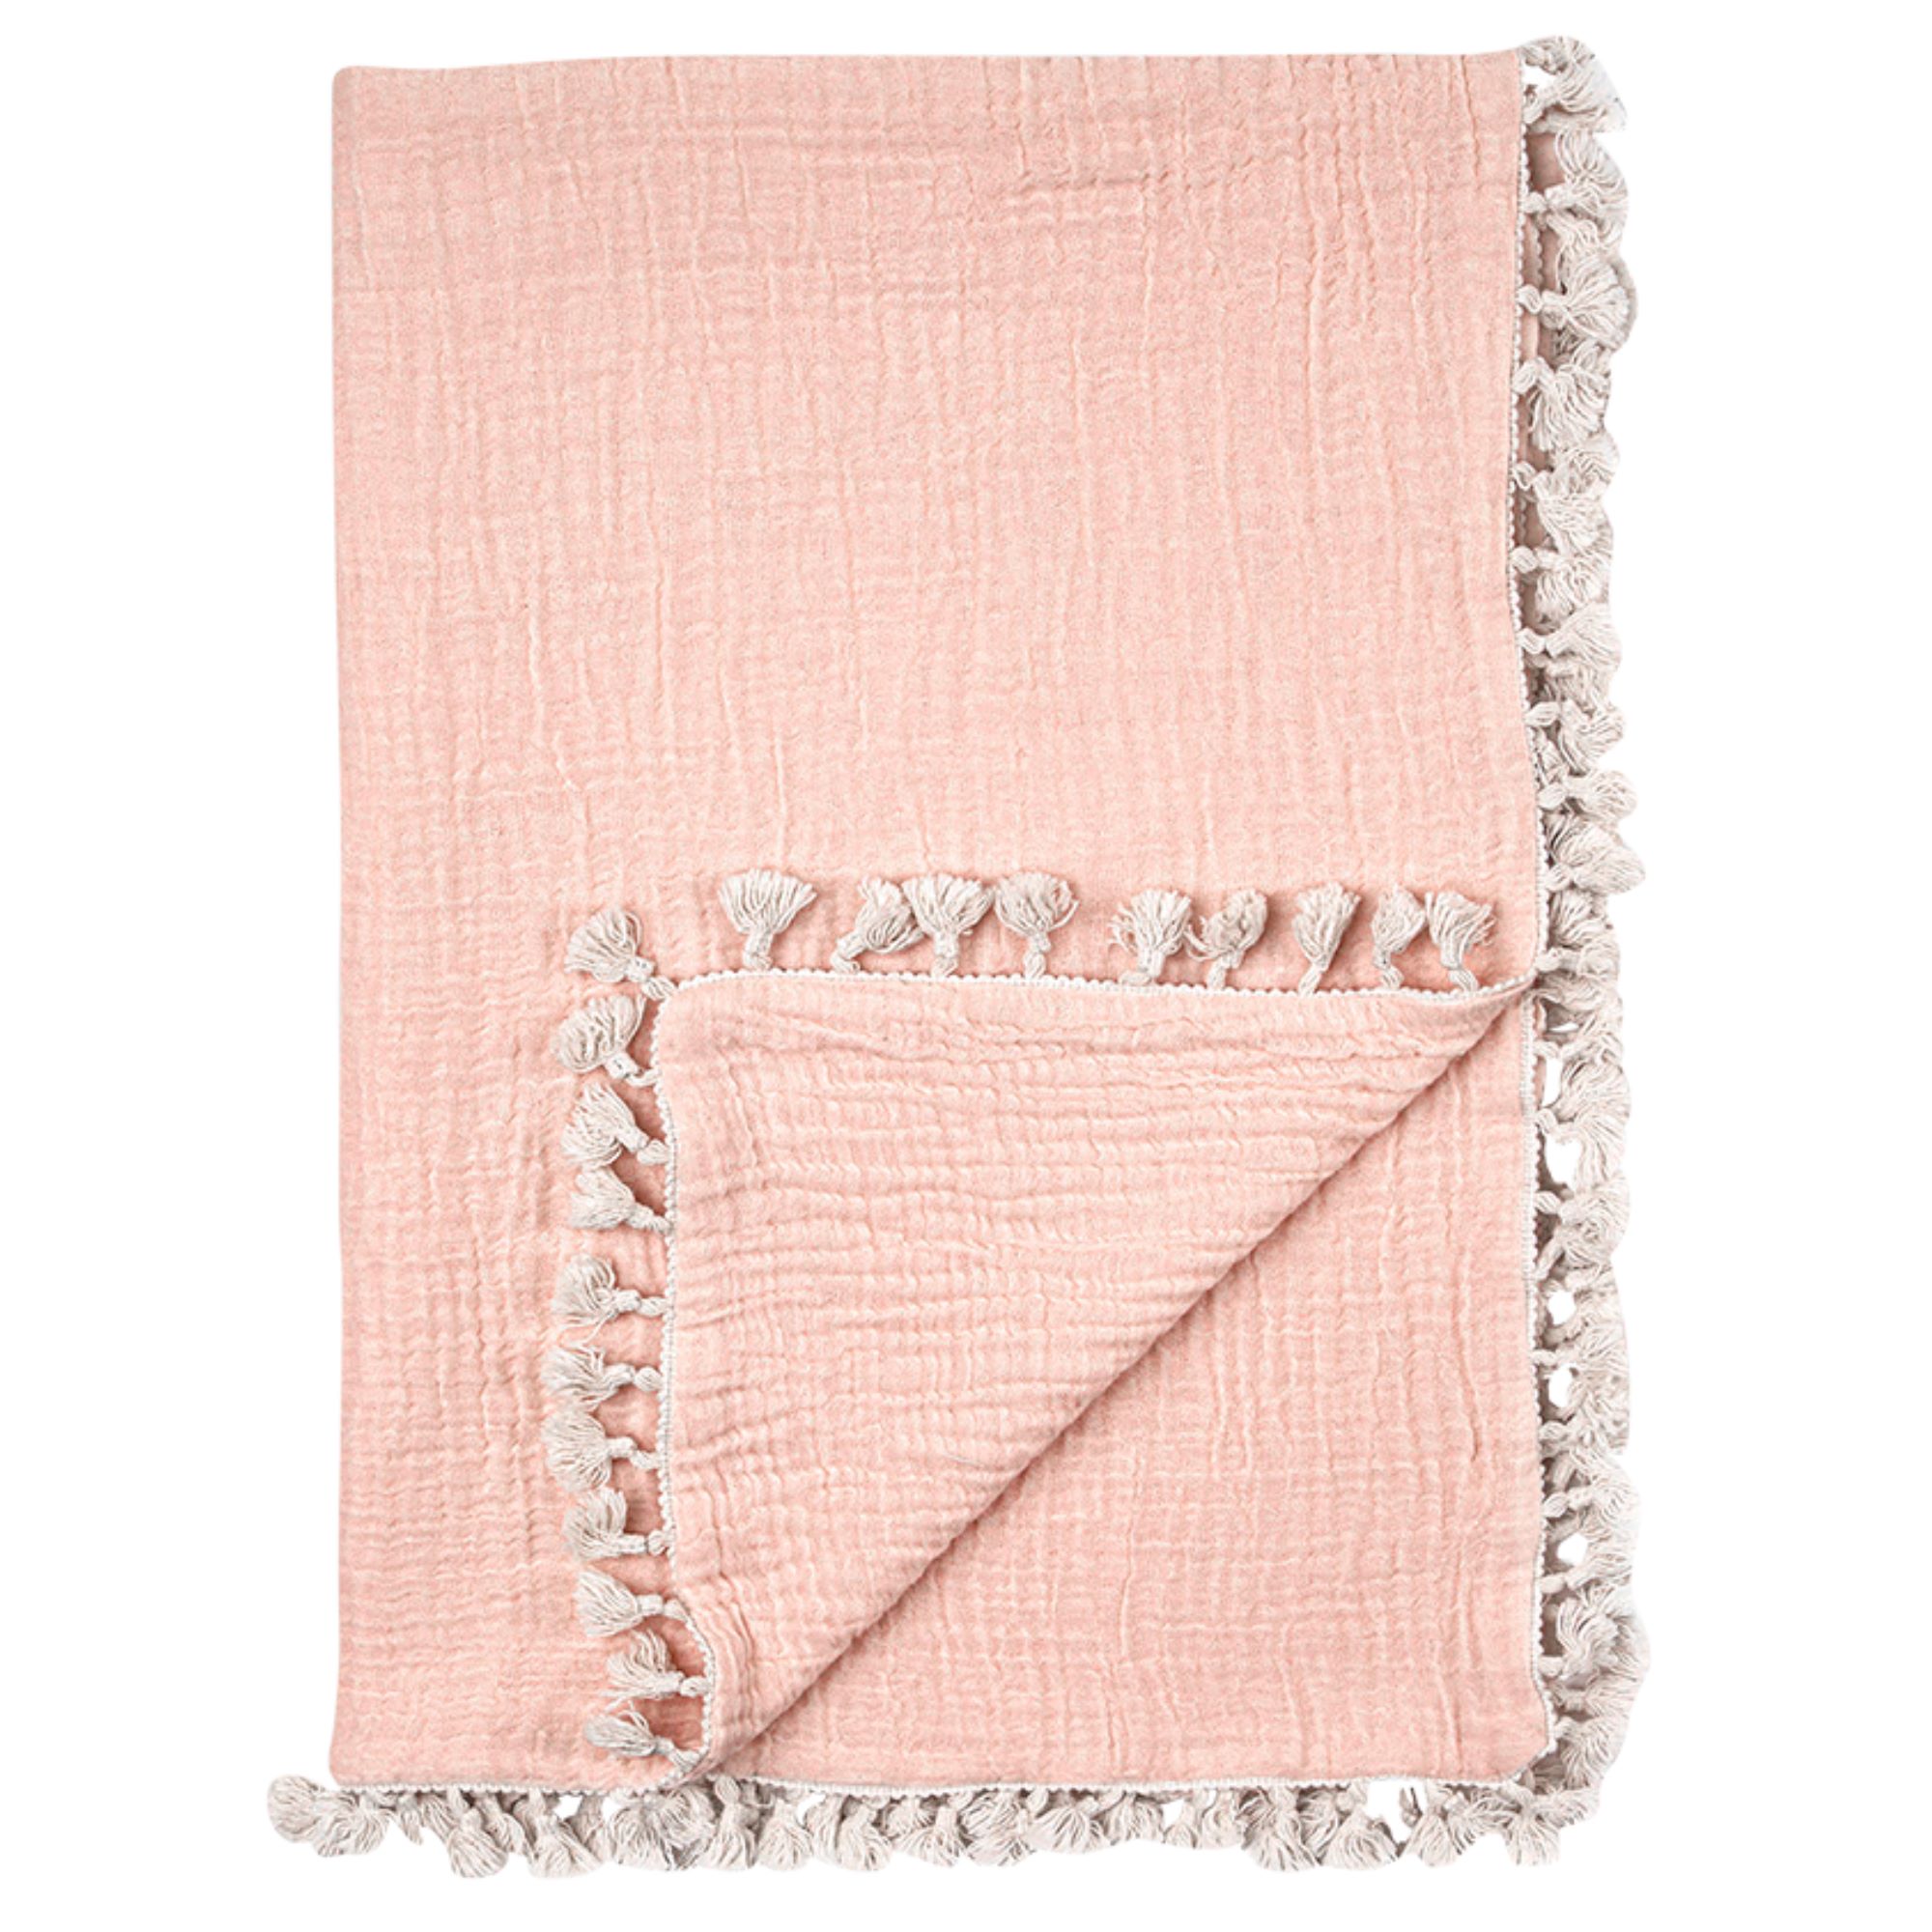 Pink muslin blanket on white background